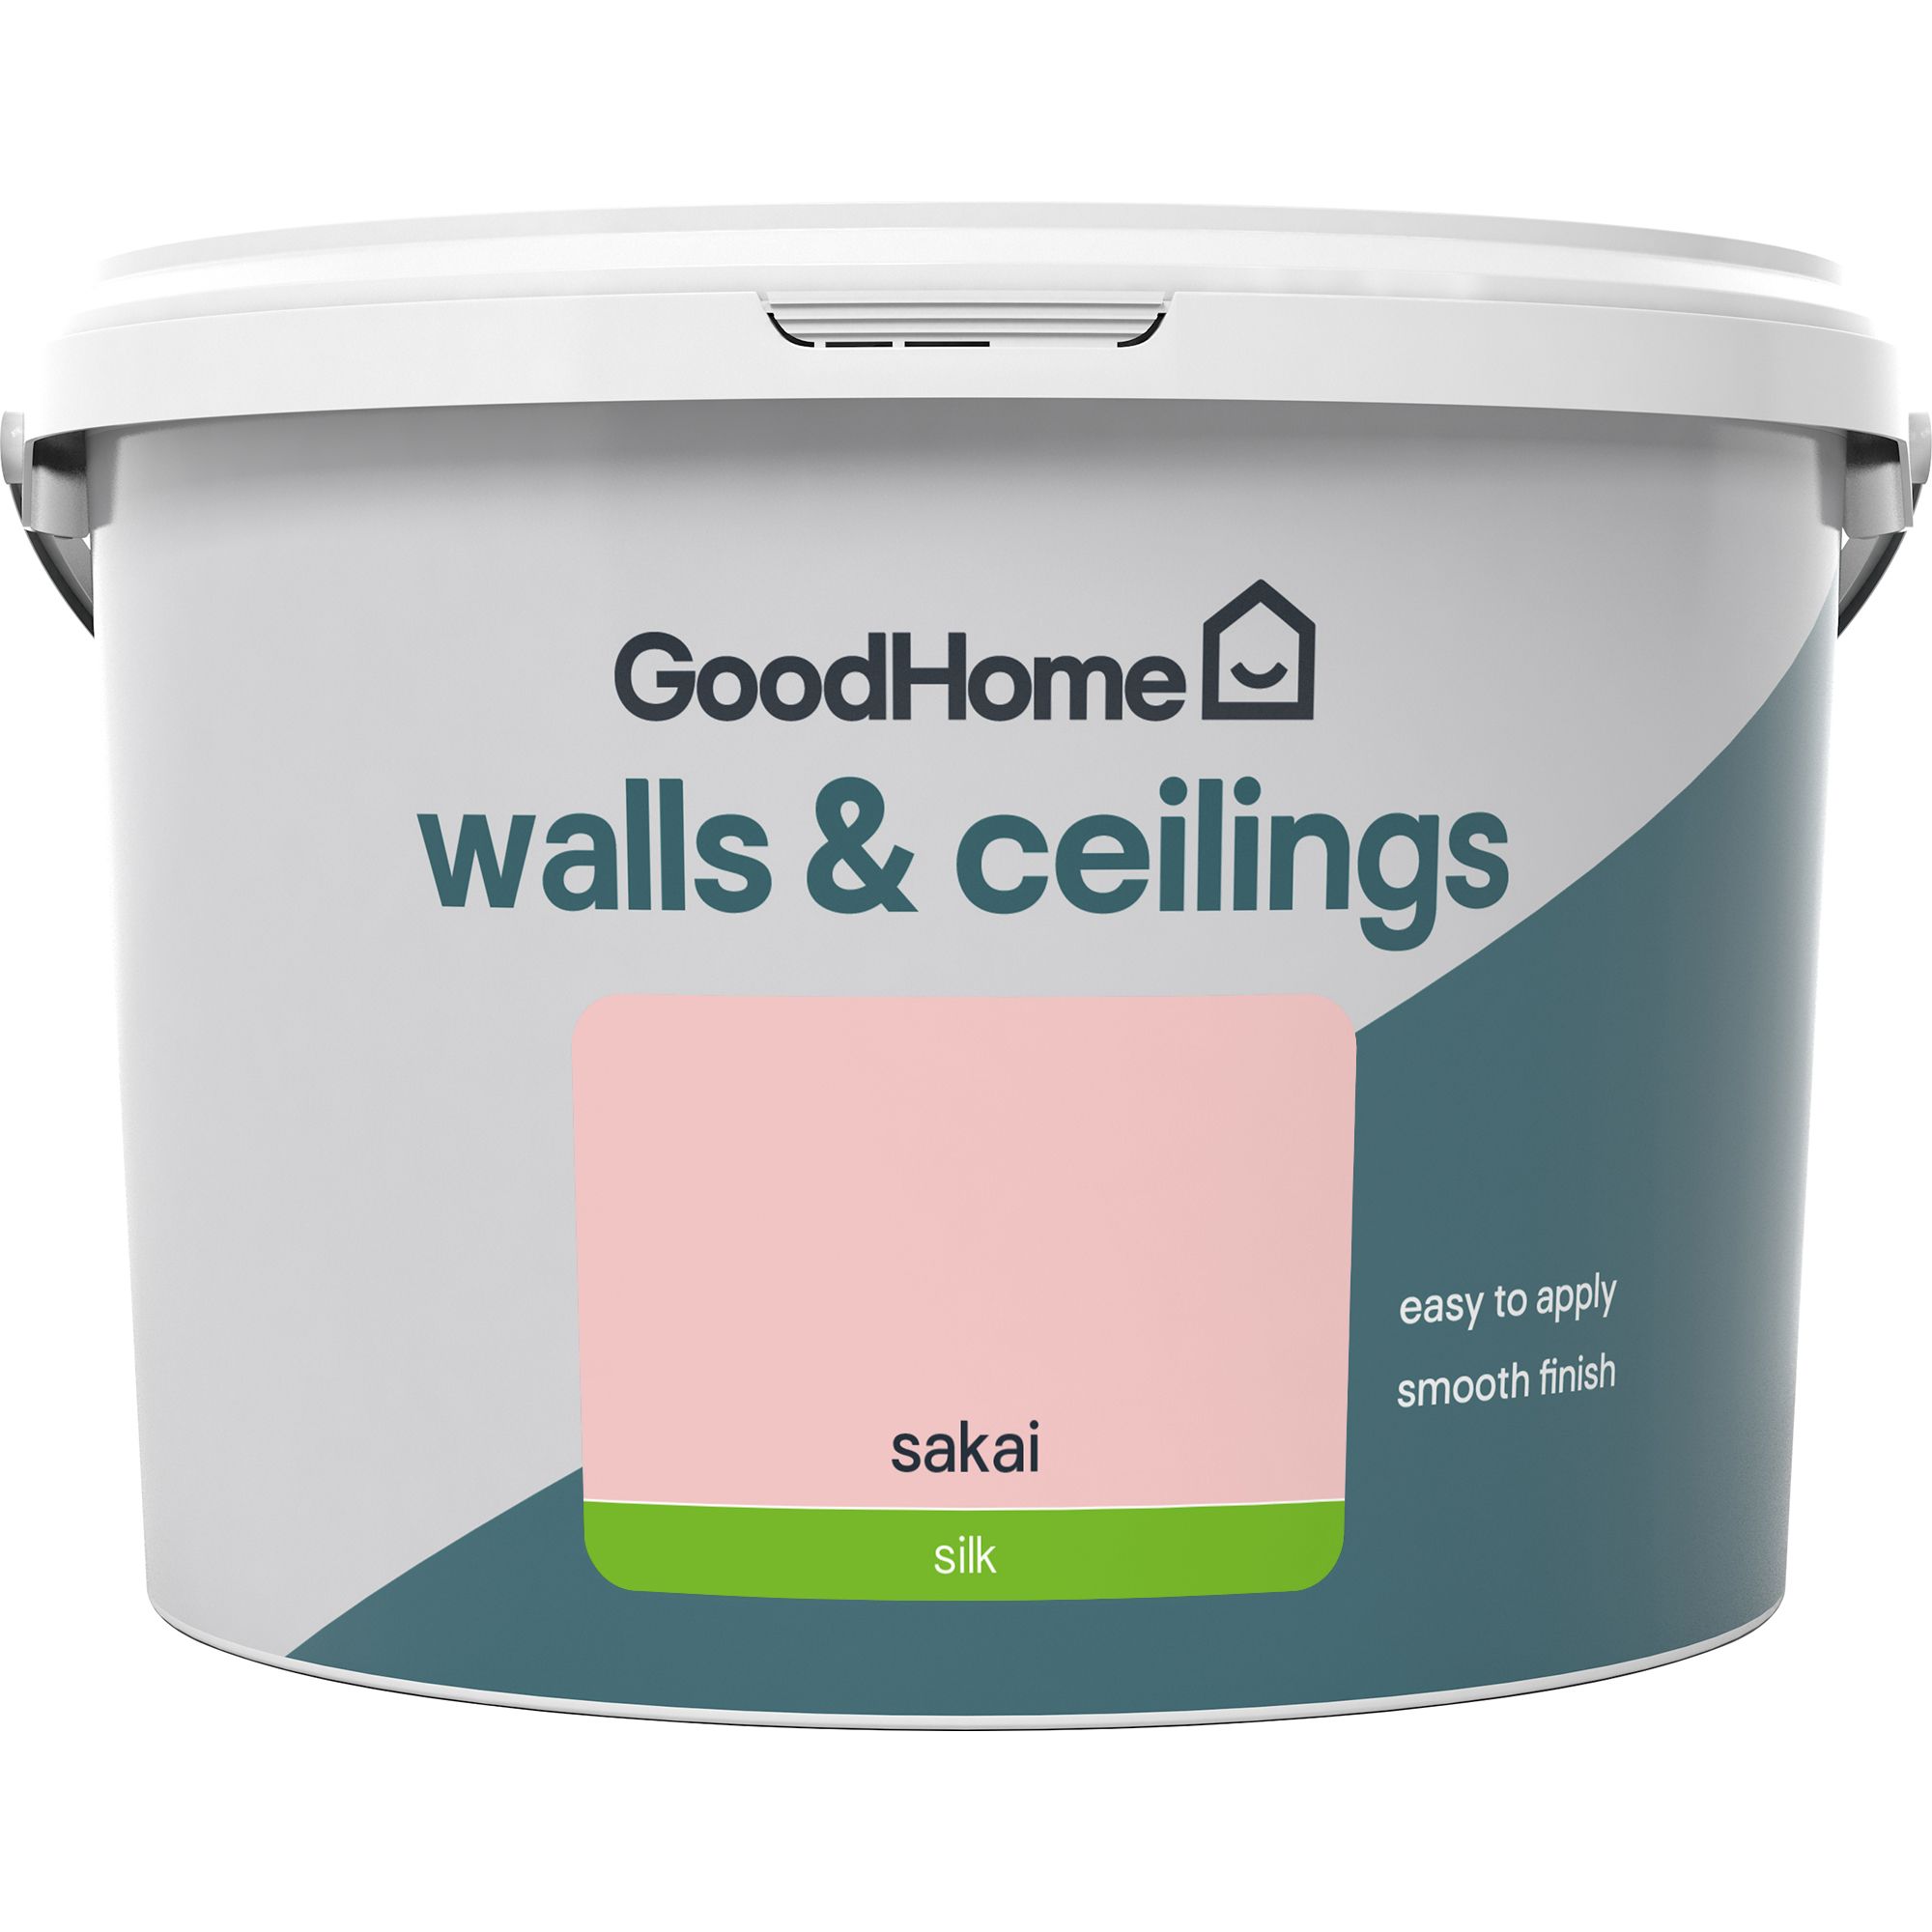 GoodHome Walls & ceilings Sakai Silk Emulsion paint, 2.5L